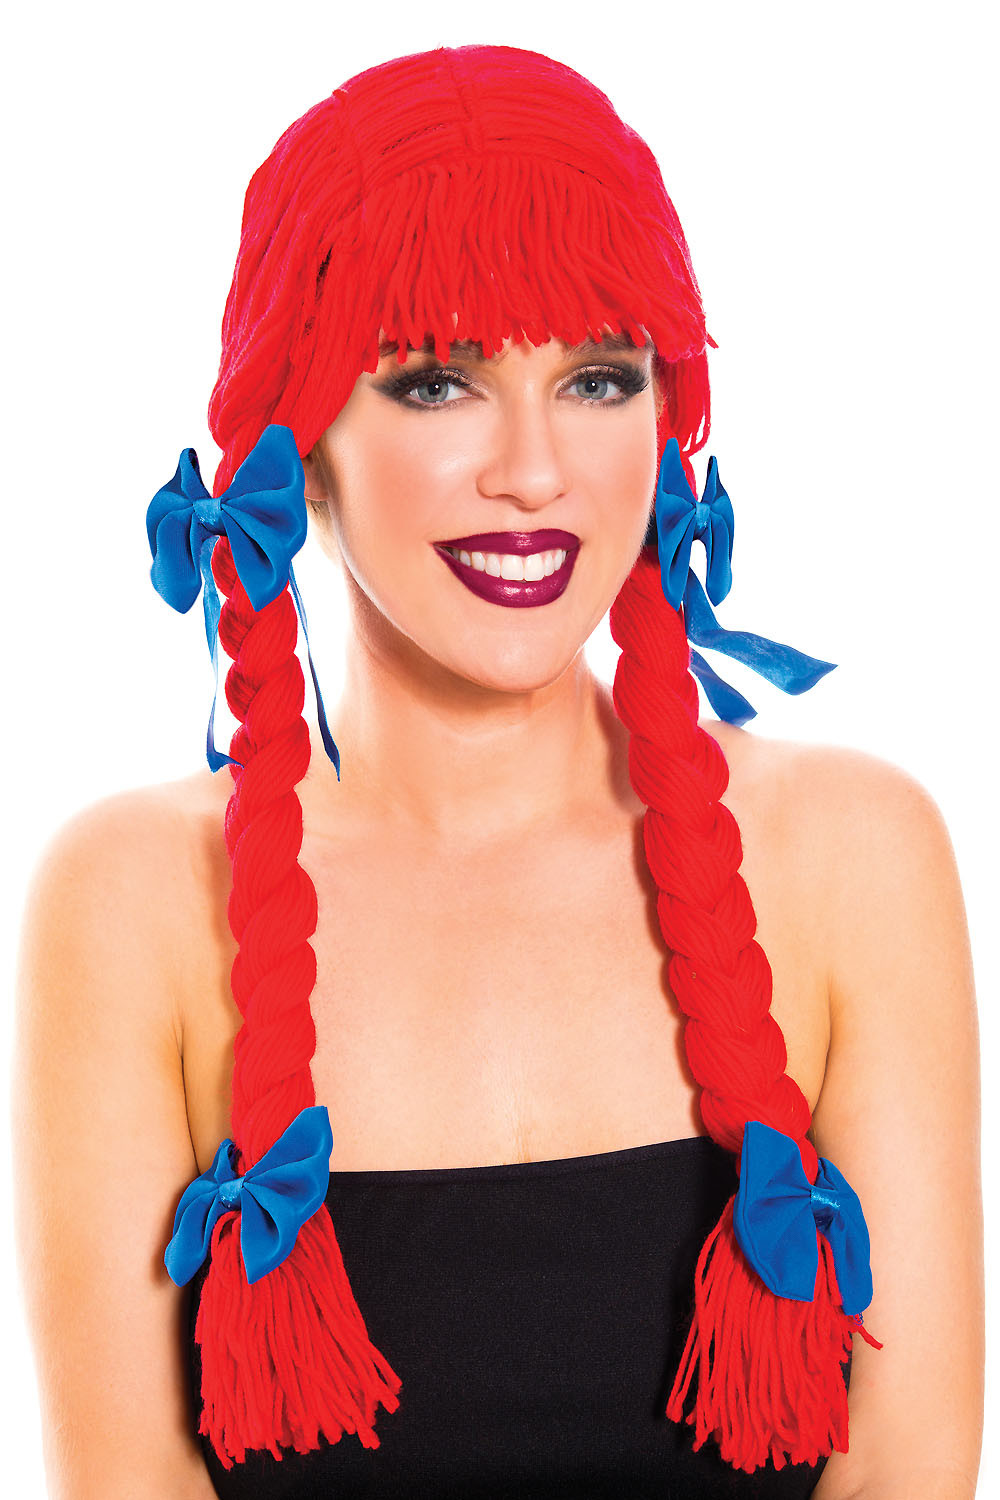 Costume Wig - Red Yarn / Raggedy Doll Wig - NOVELTY WIGS GOTHIC